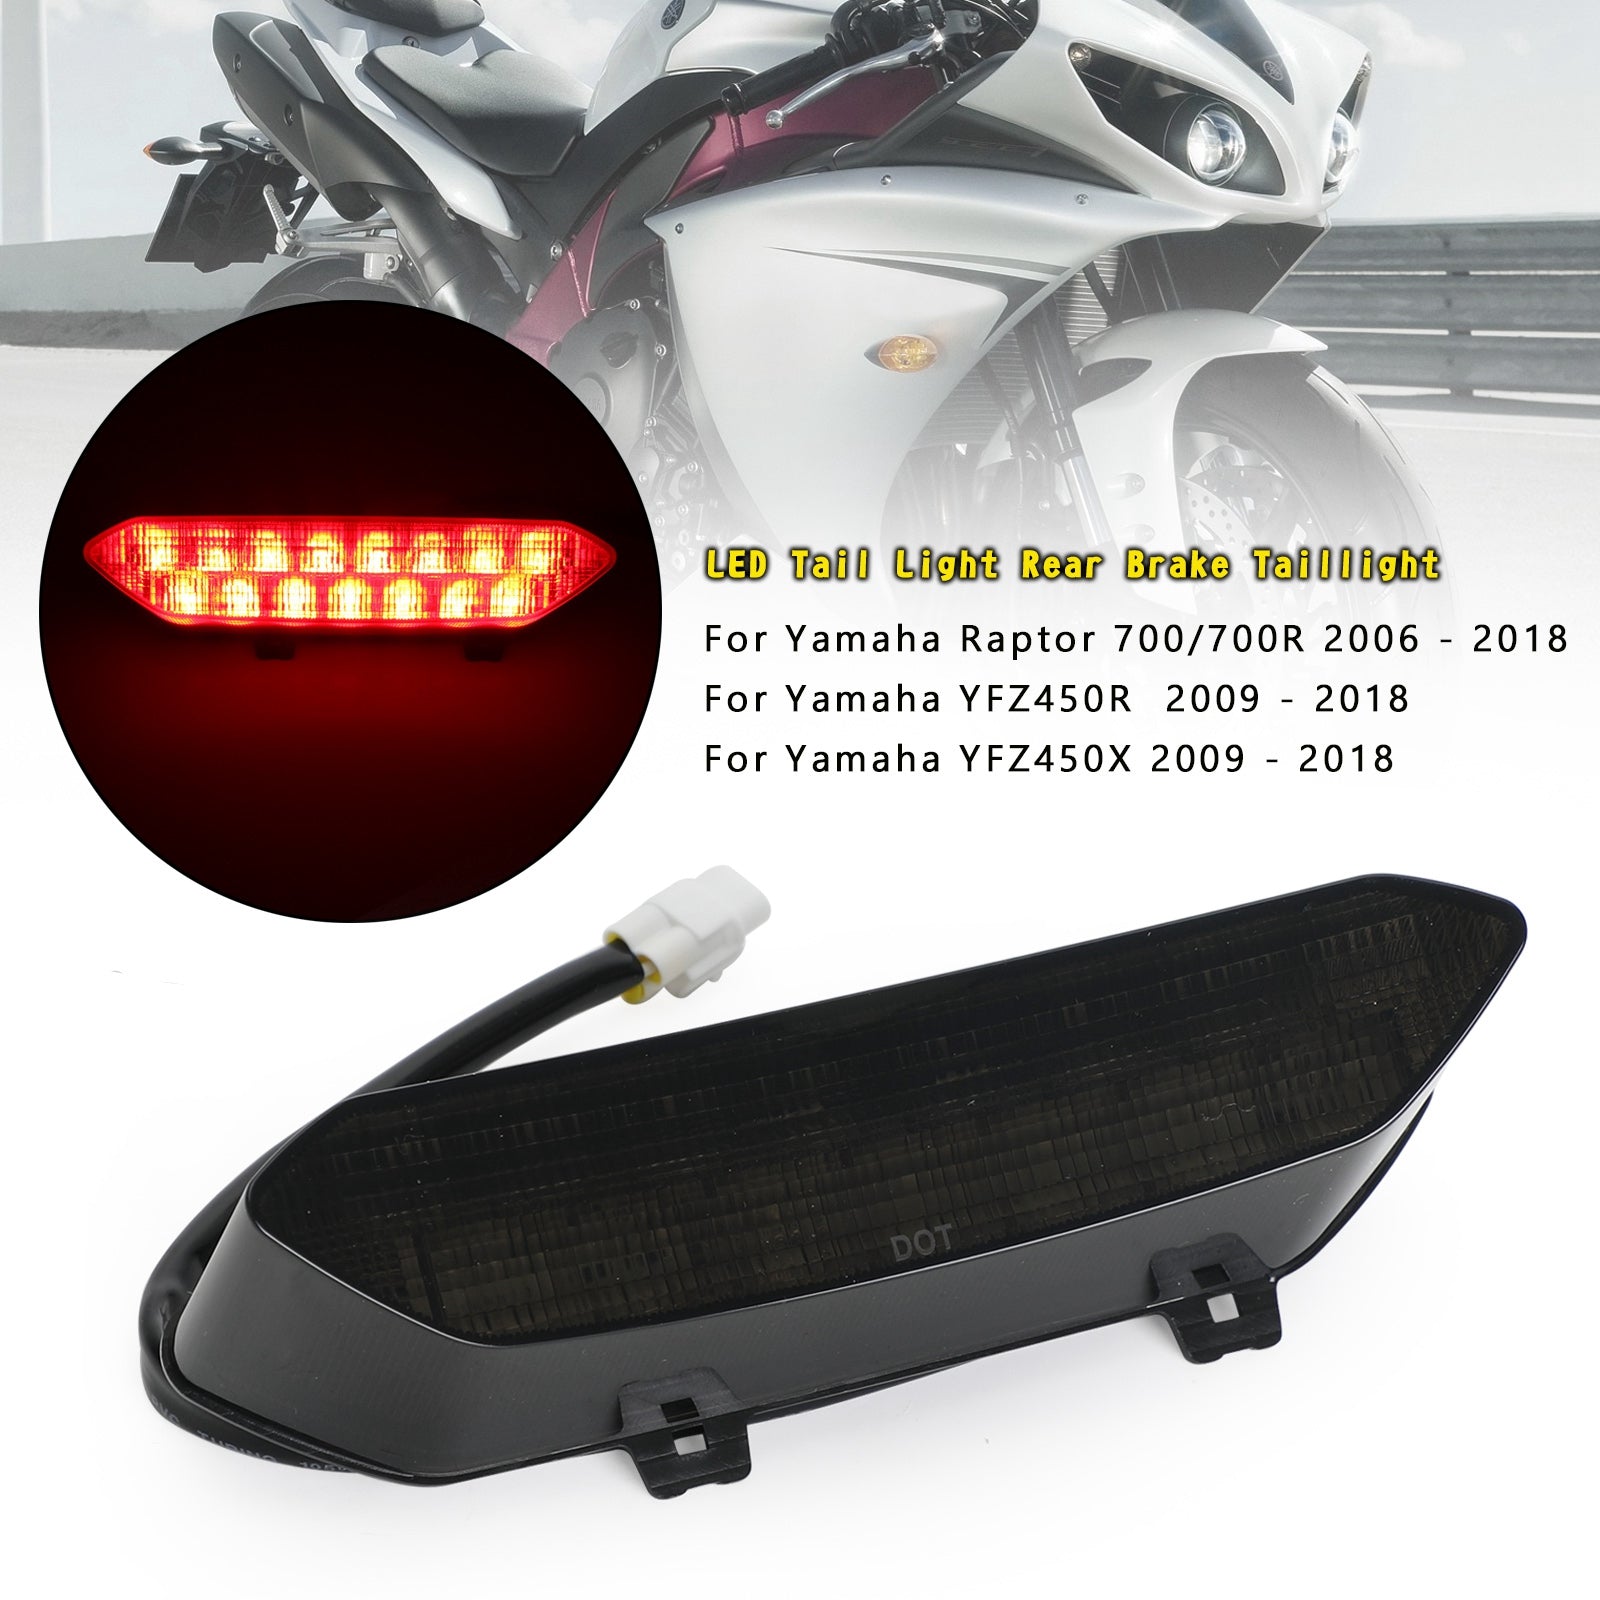 LED Brake Tail Light Fit For Yamaha Raptor 700/700R YFZ450R 2006-2018 Generic